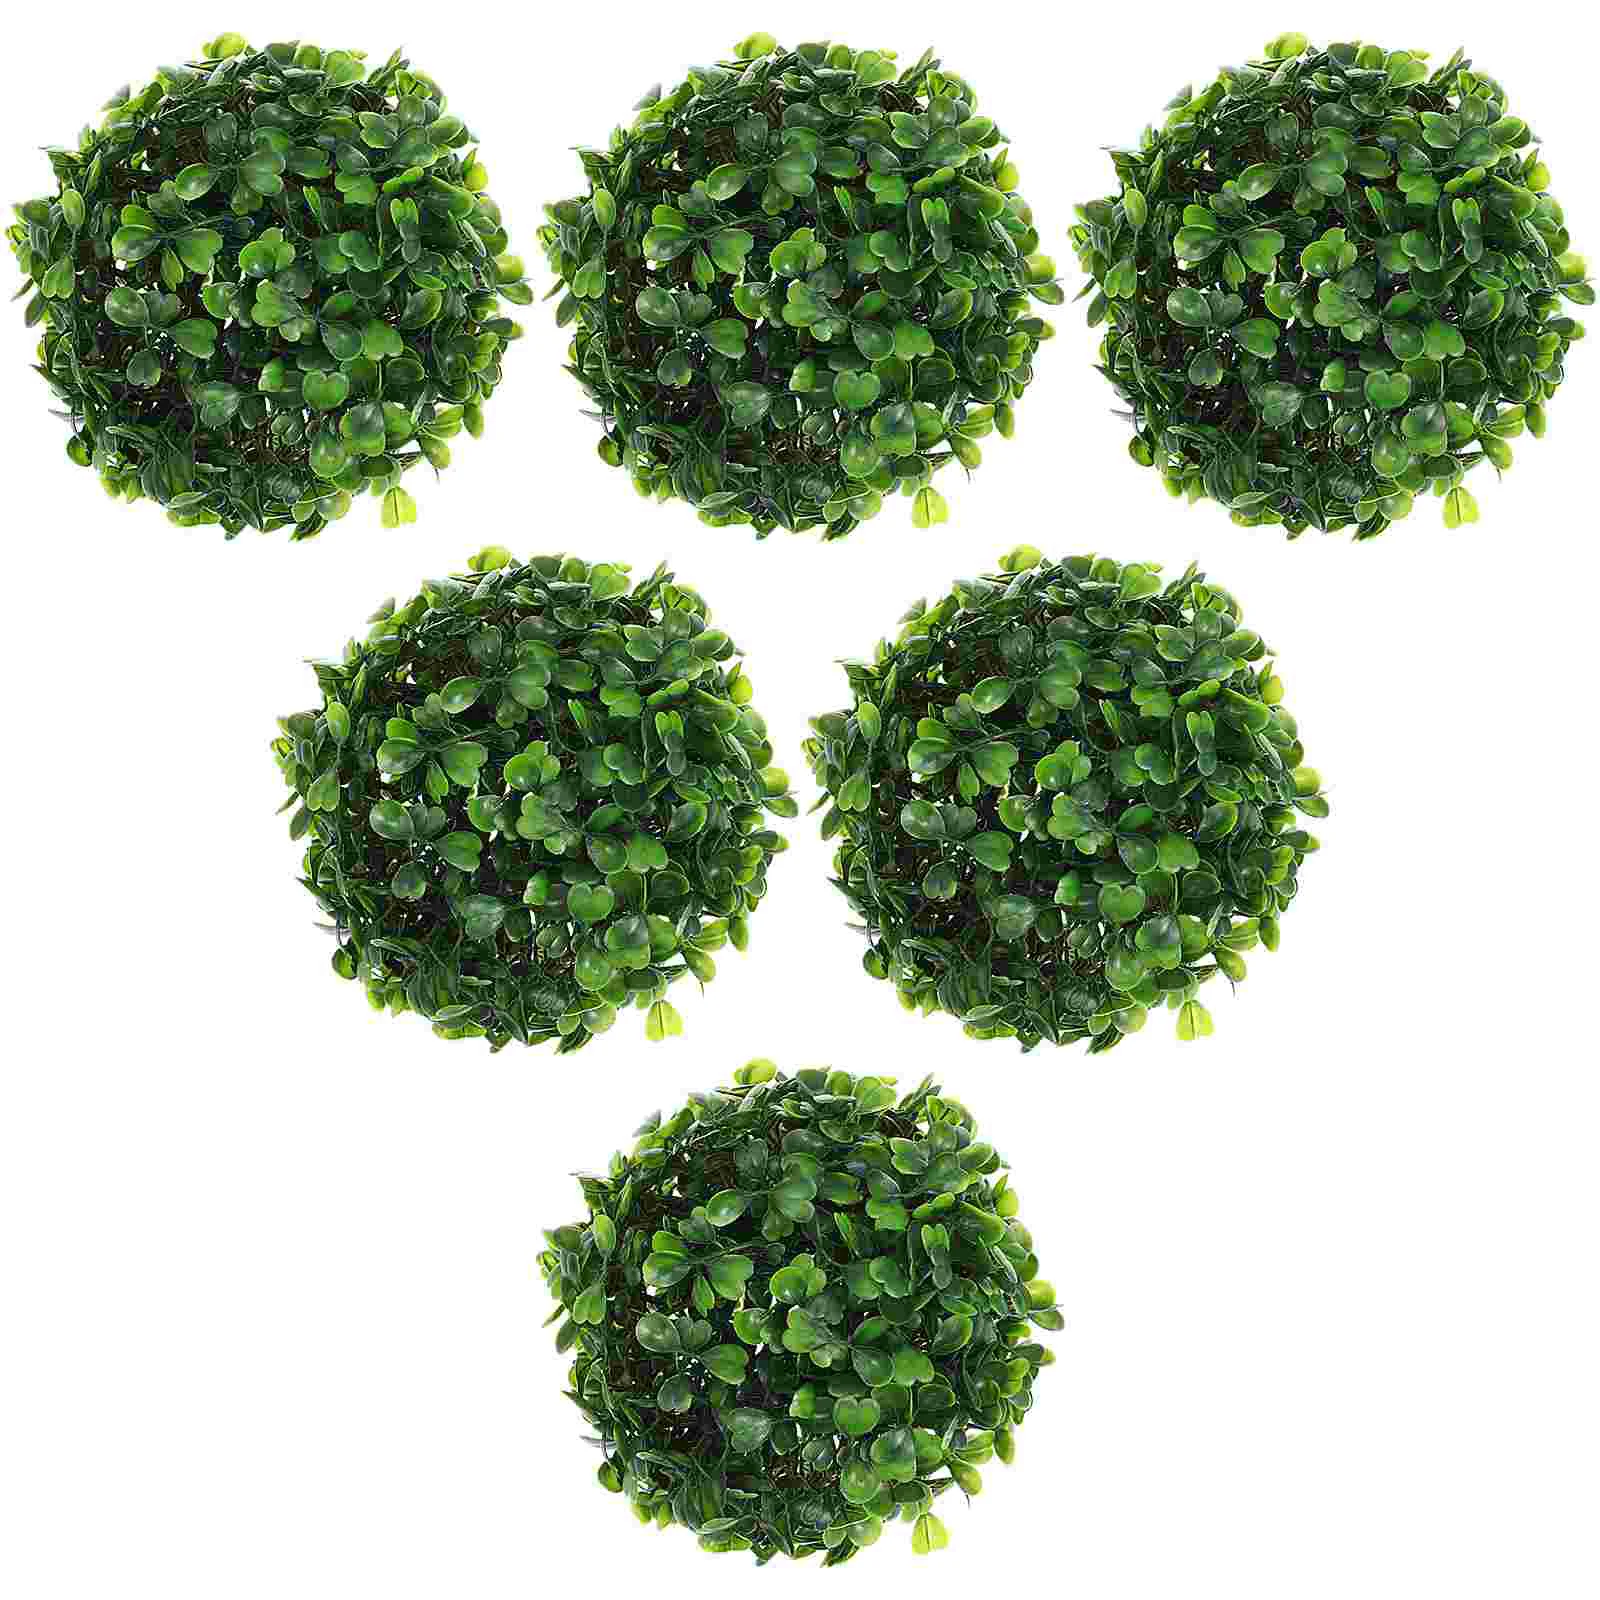 

6 Pcs Creative Grass Balls Decor Wedding Party Green Plants Flower Arrangement Ornament